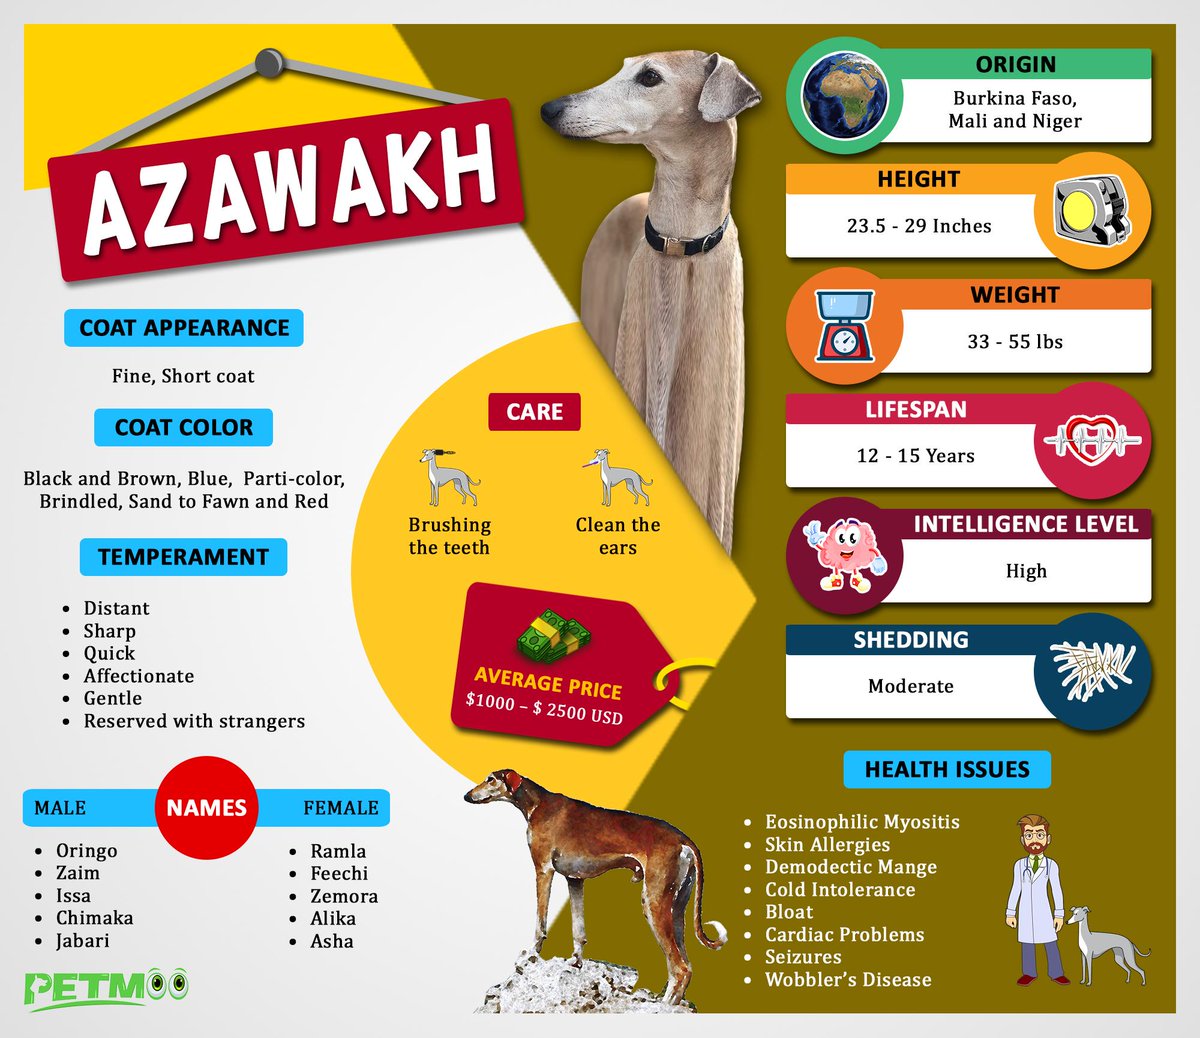 Azawakh Infographic
#petmoo #pets #dogs #dogbreeds #doginfographic #azawakhinfographic